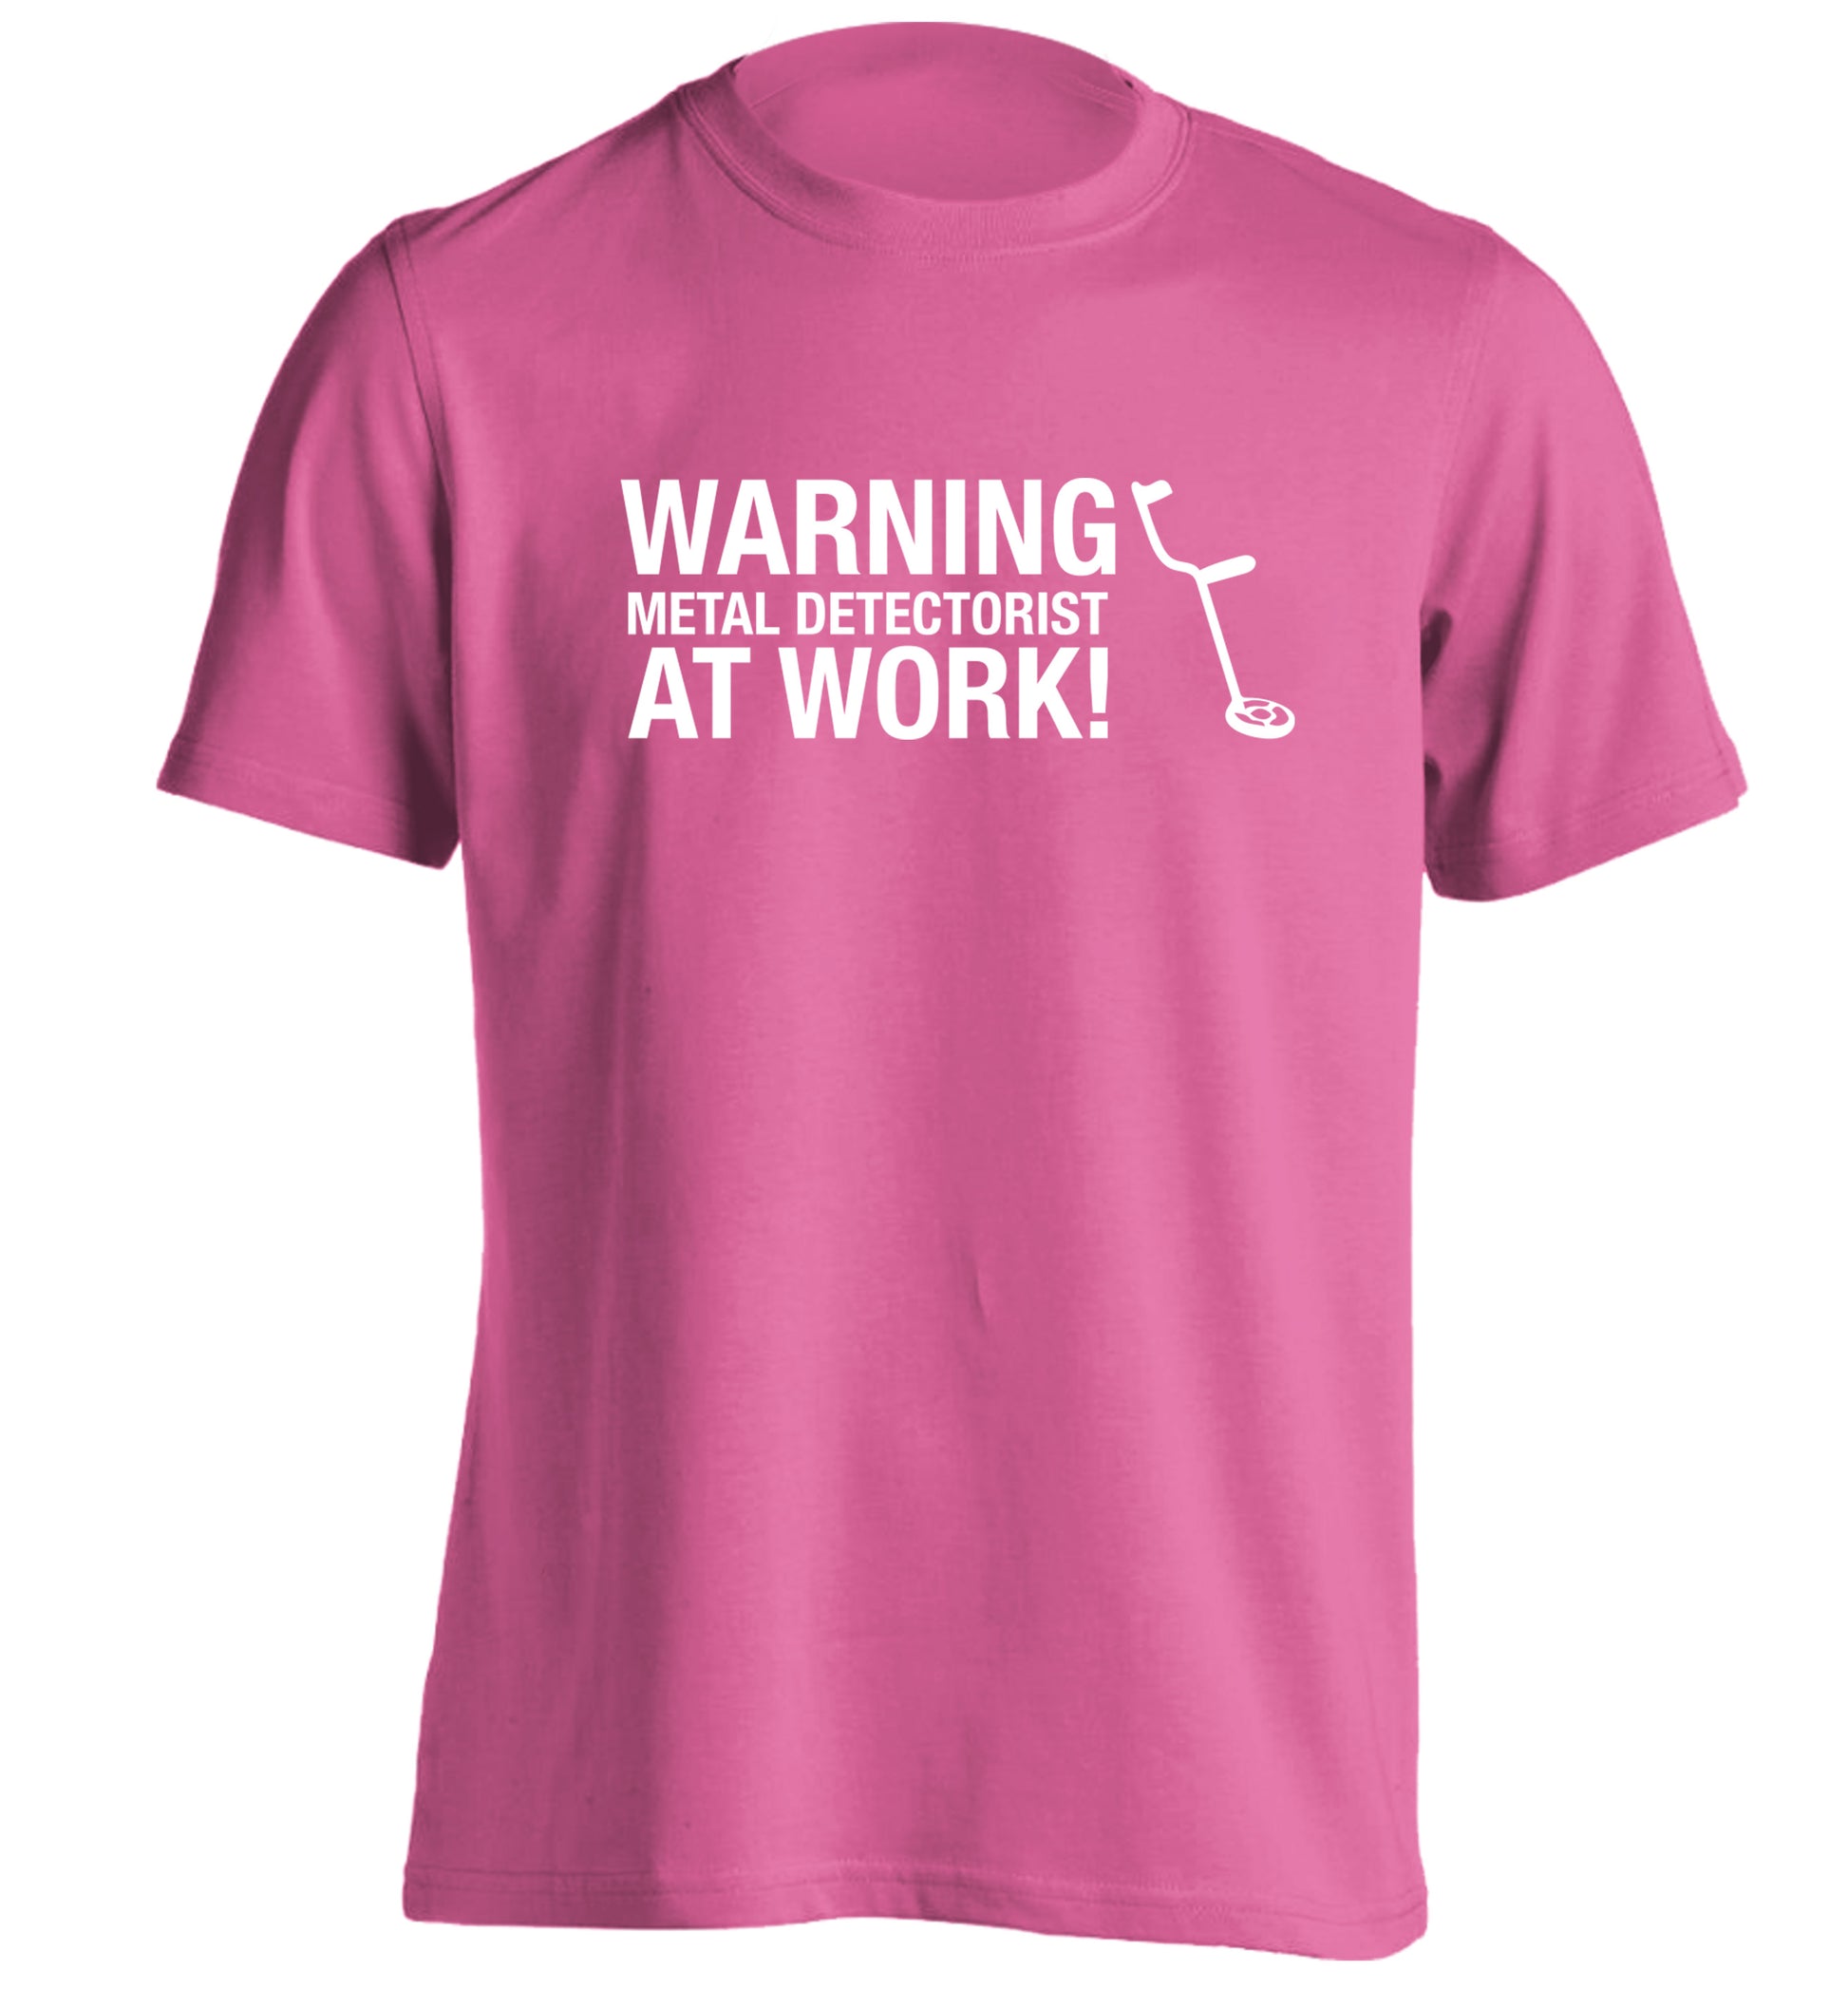 Warning metal detectorist at work! adults unisex pink Tshirt 2XL